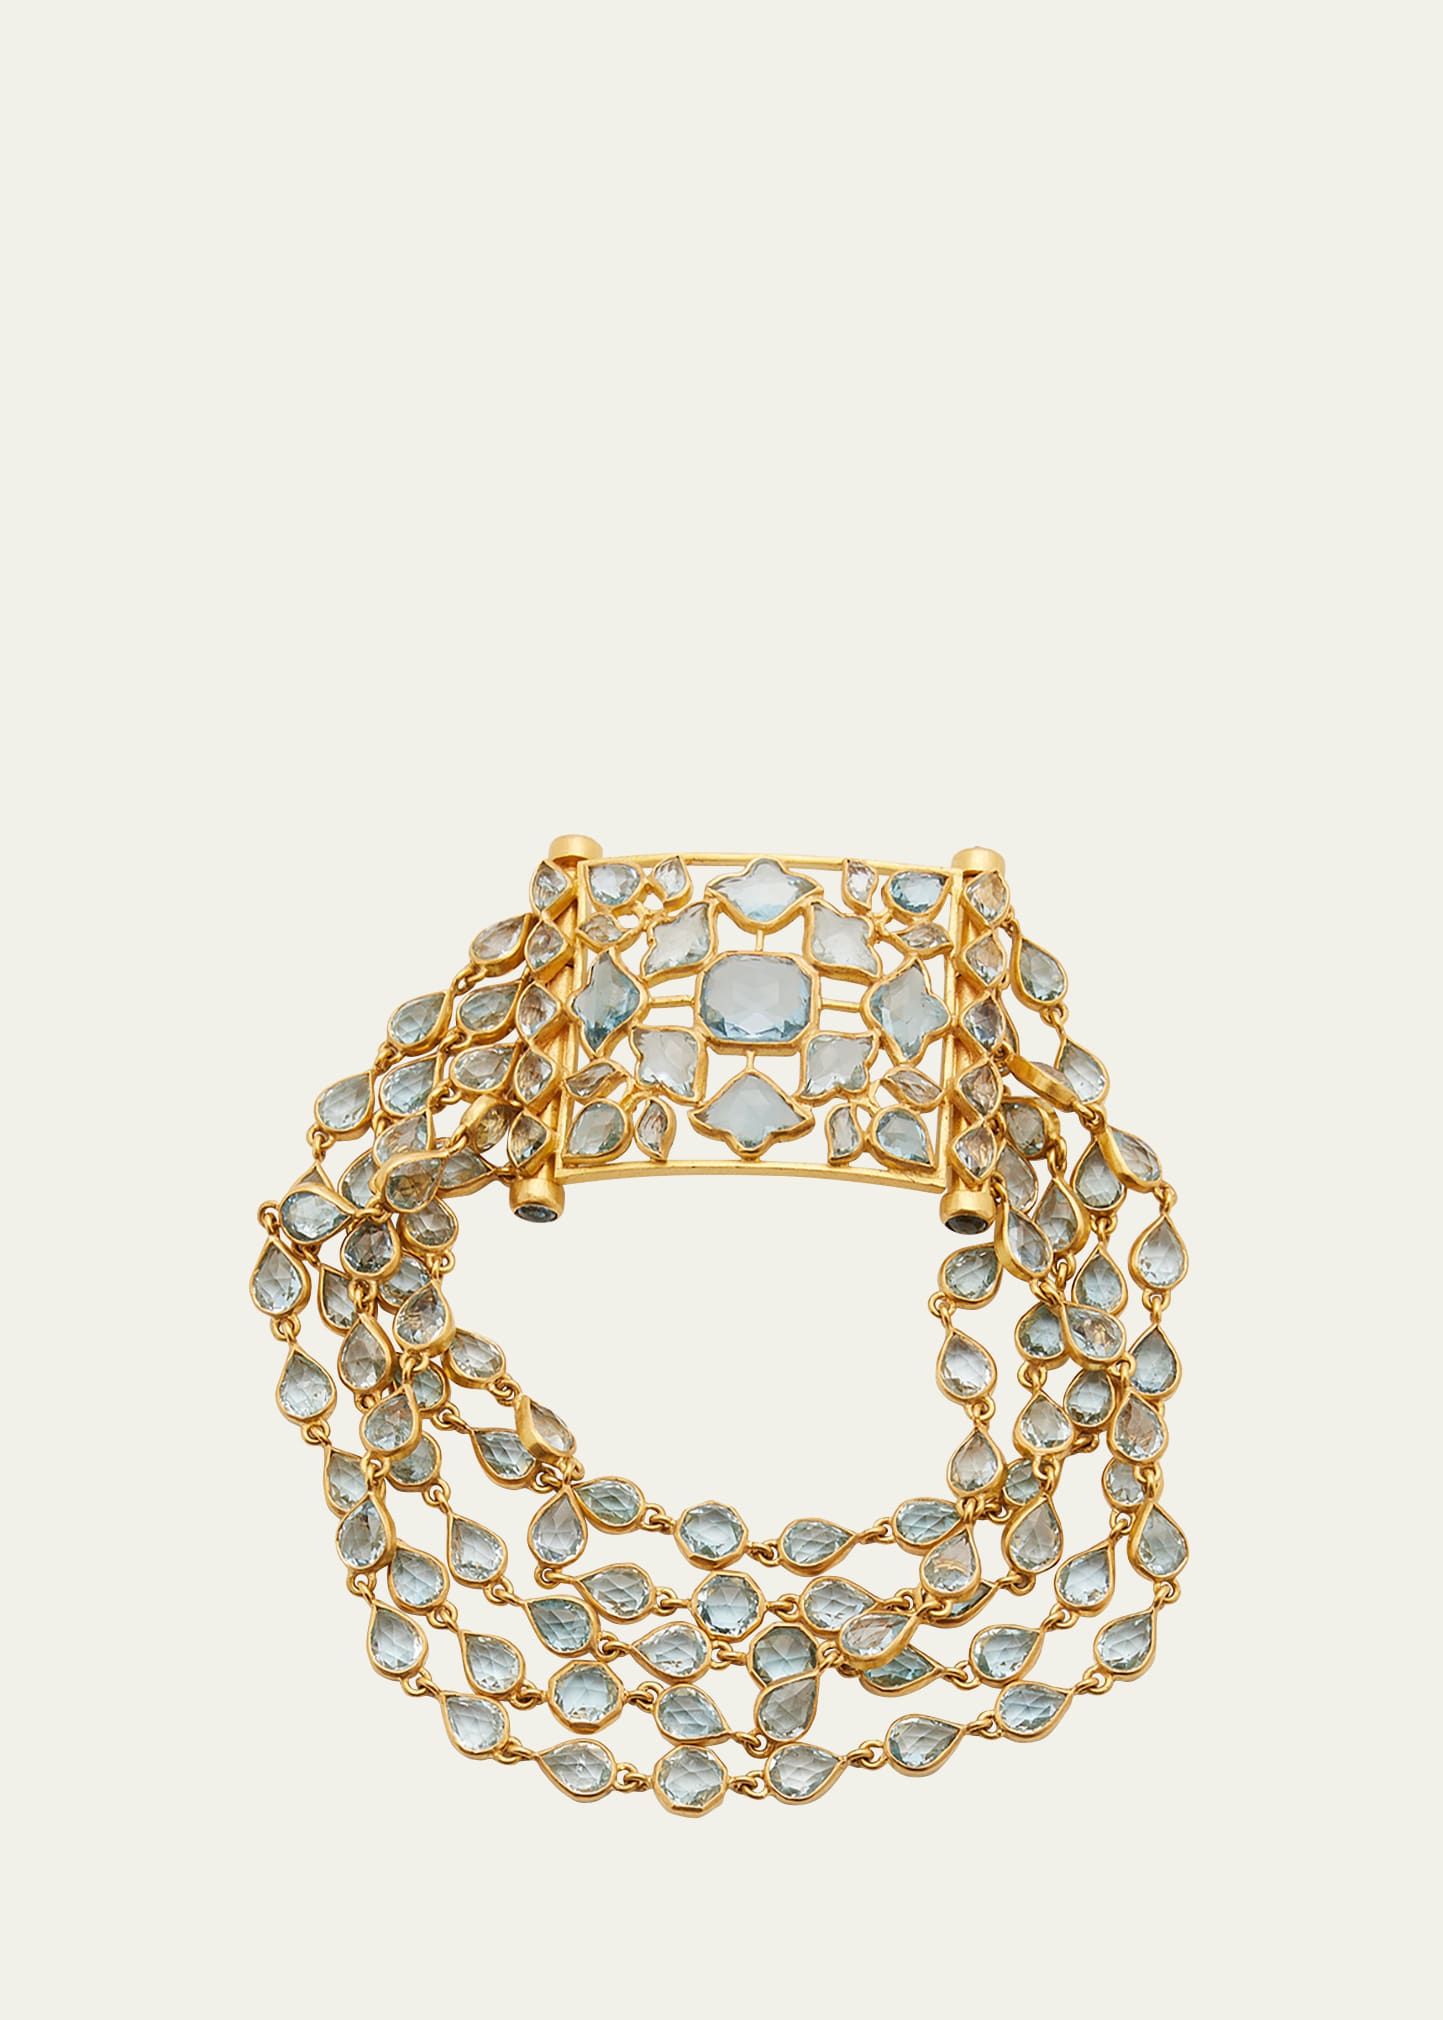 22K Gold Flower Bracelet with Aquamarine